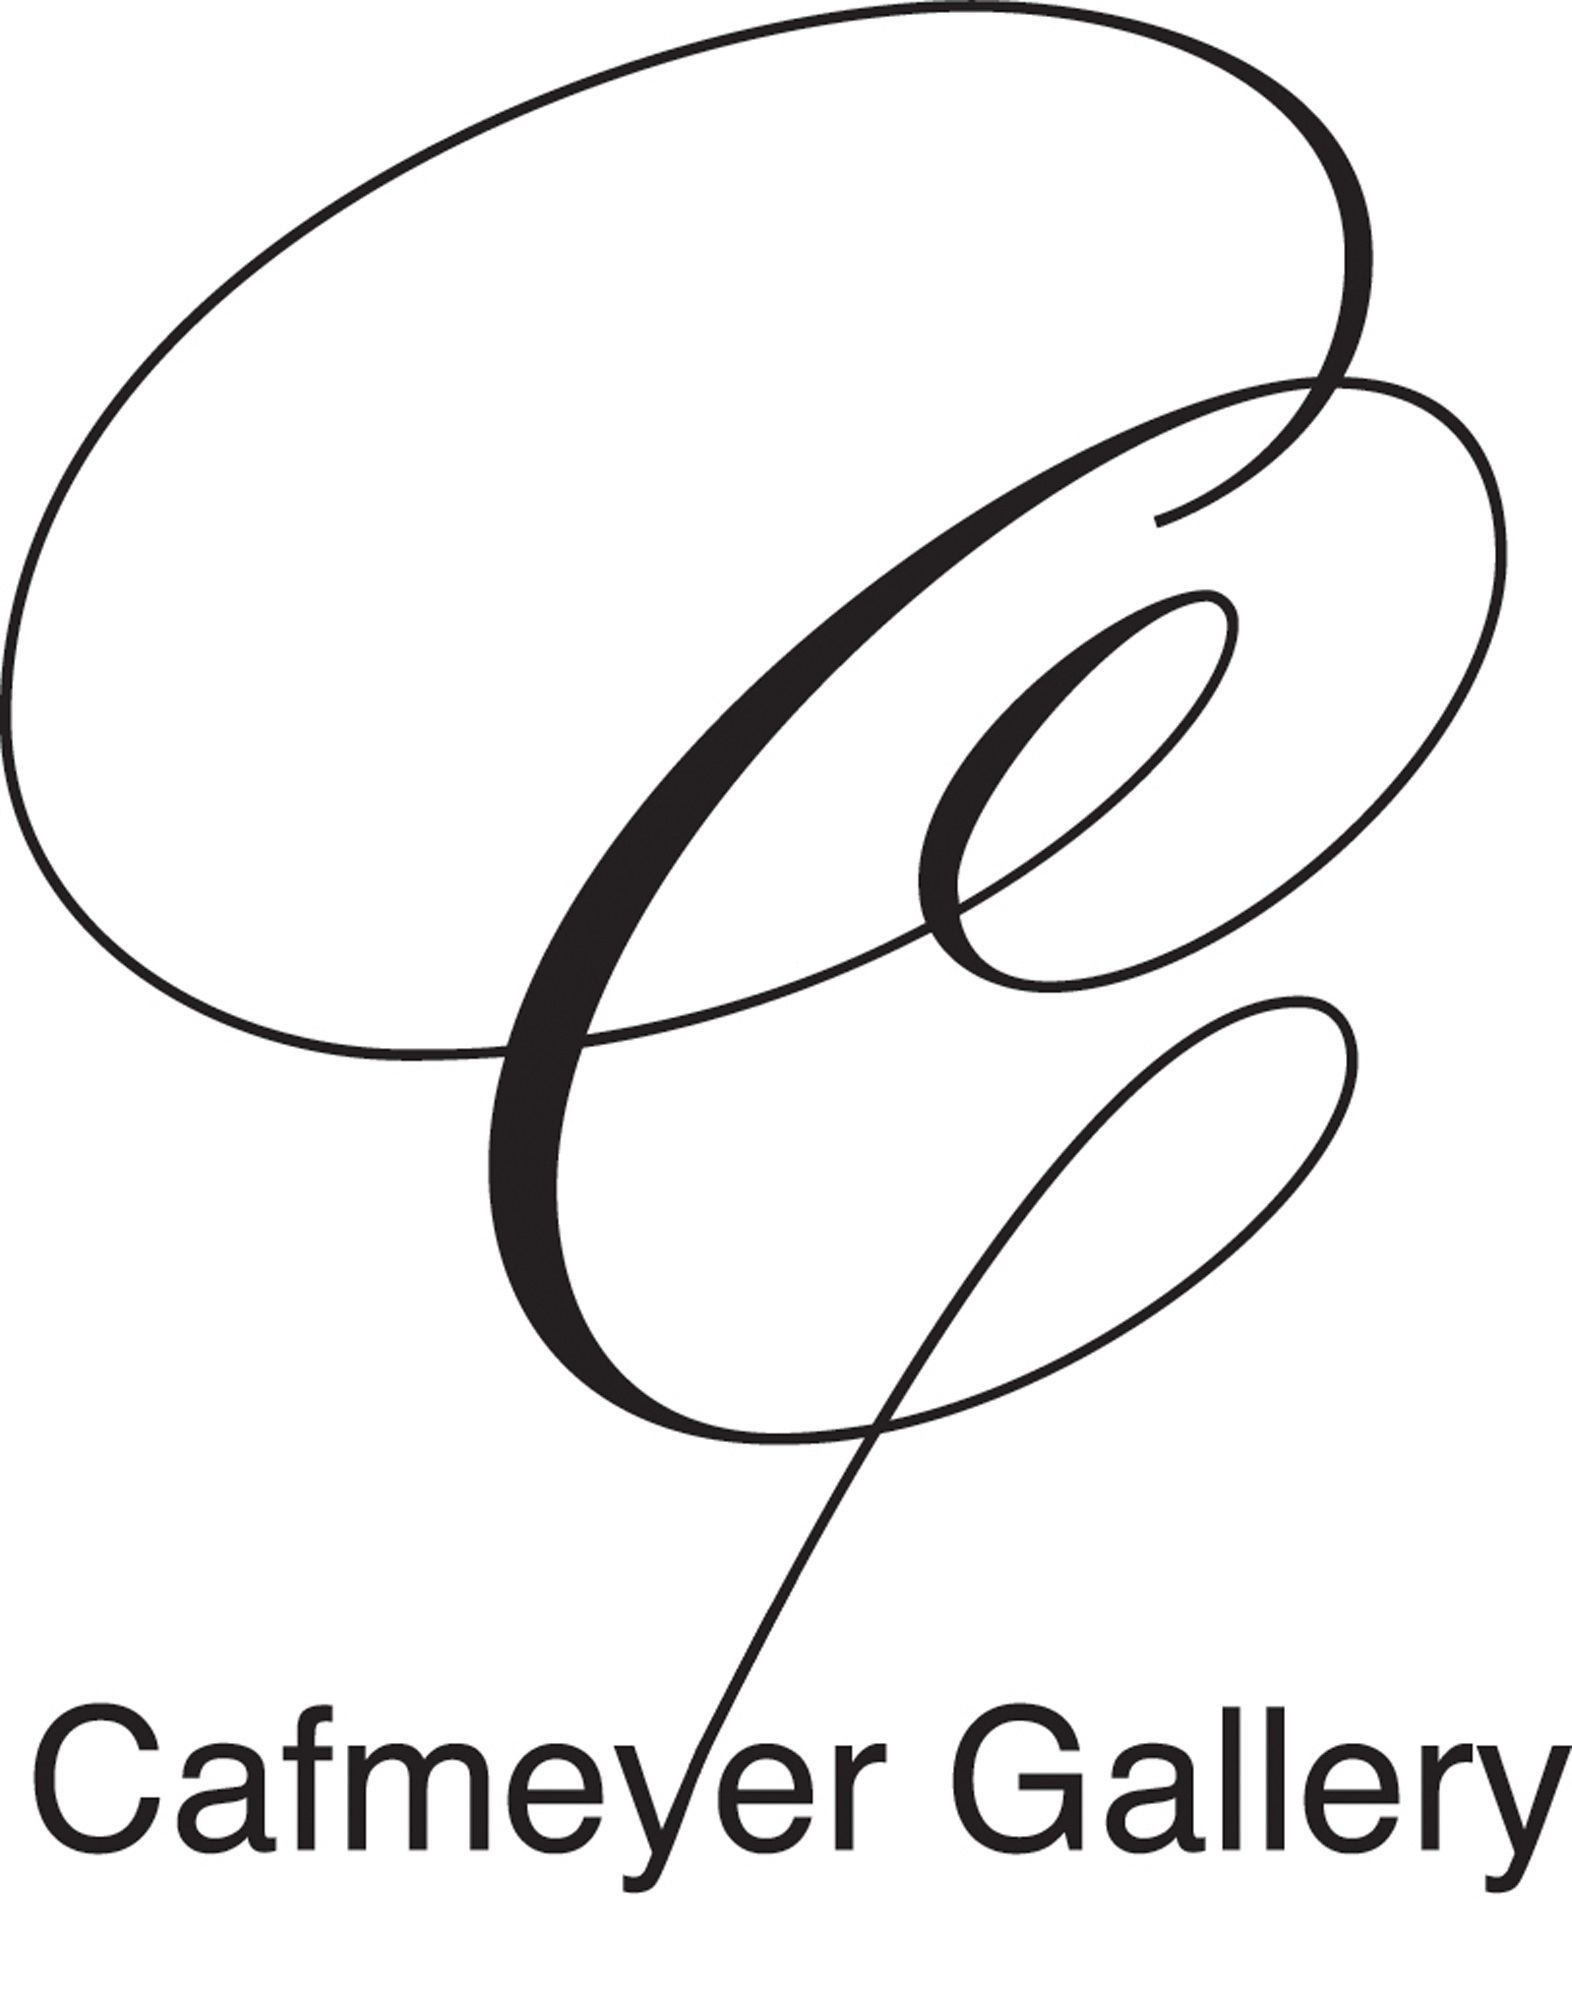 Cafmeyer Gallery